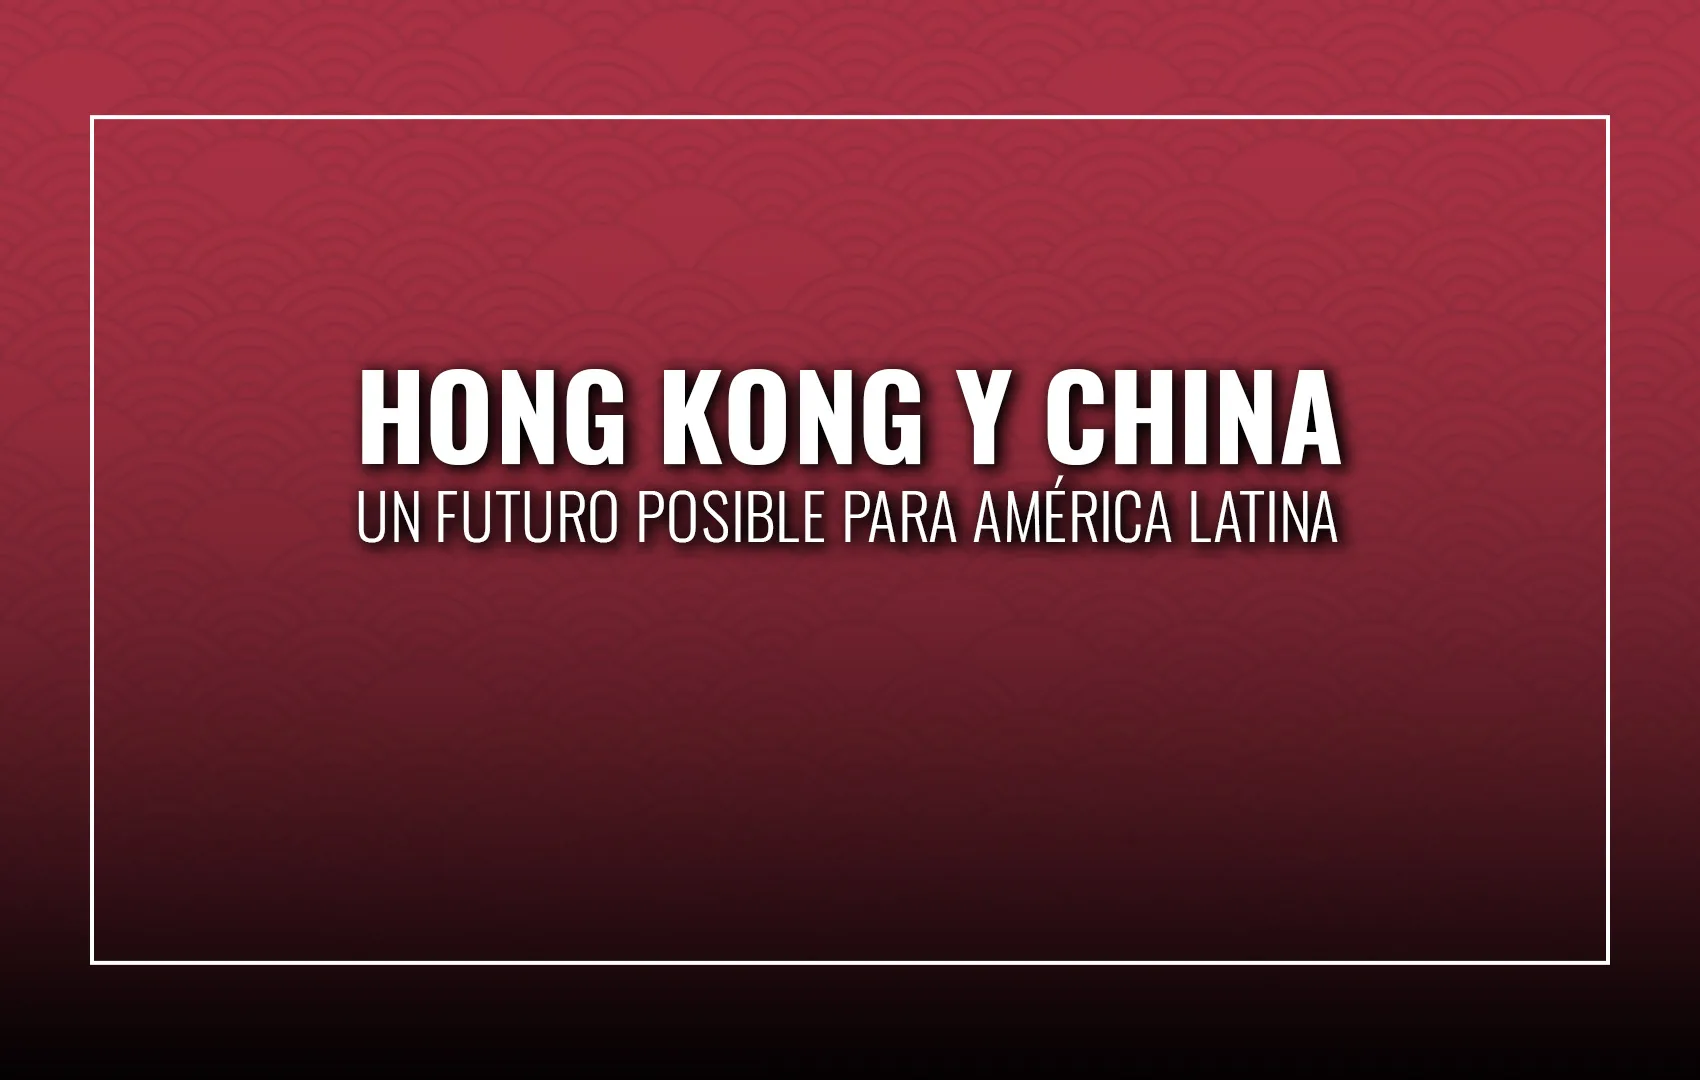 Hong Kong y China: ¿Un futuro posible para América Latina?